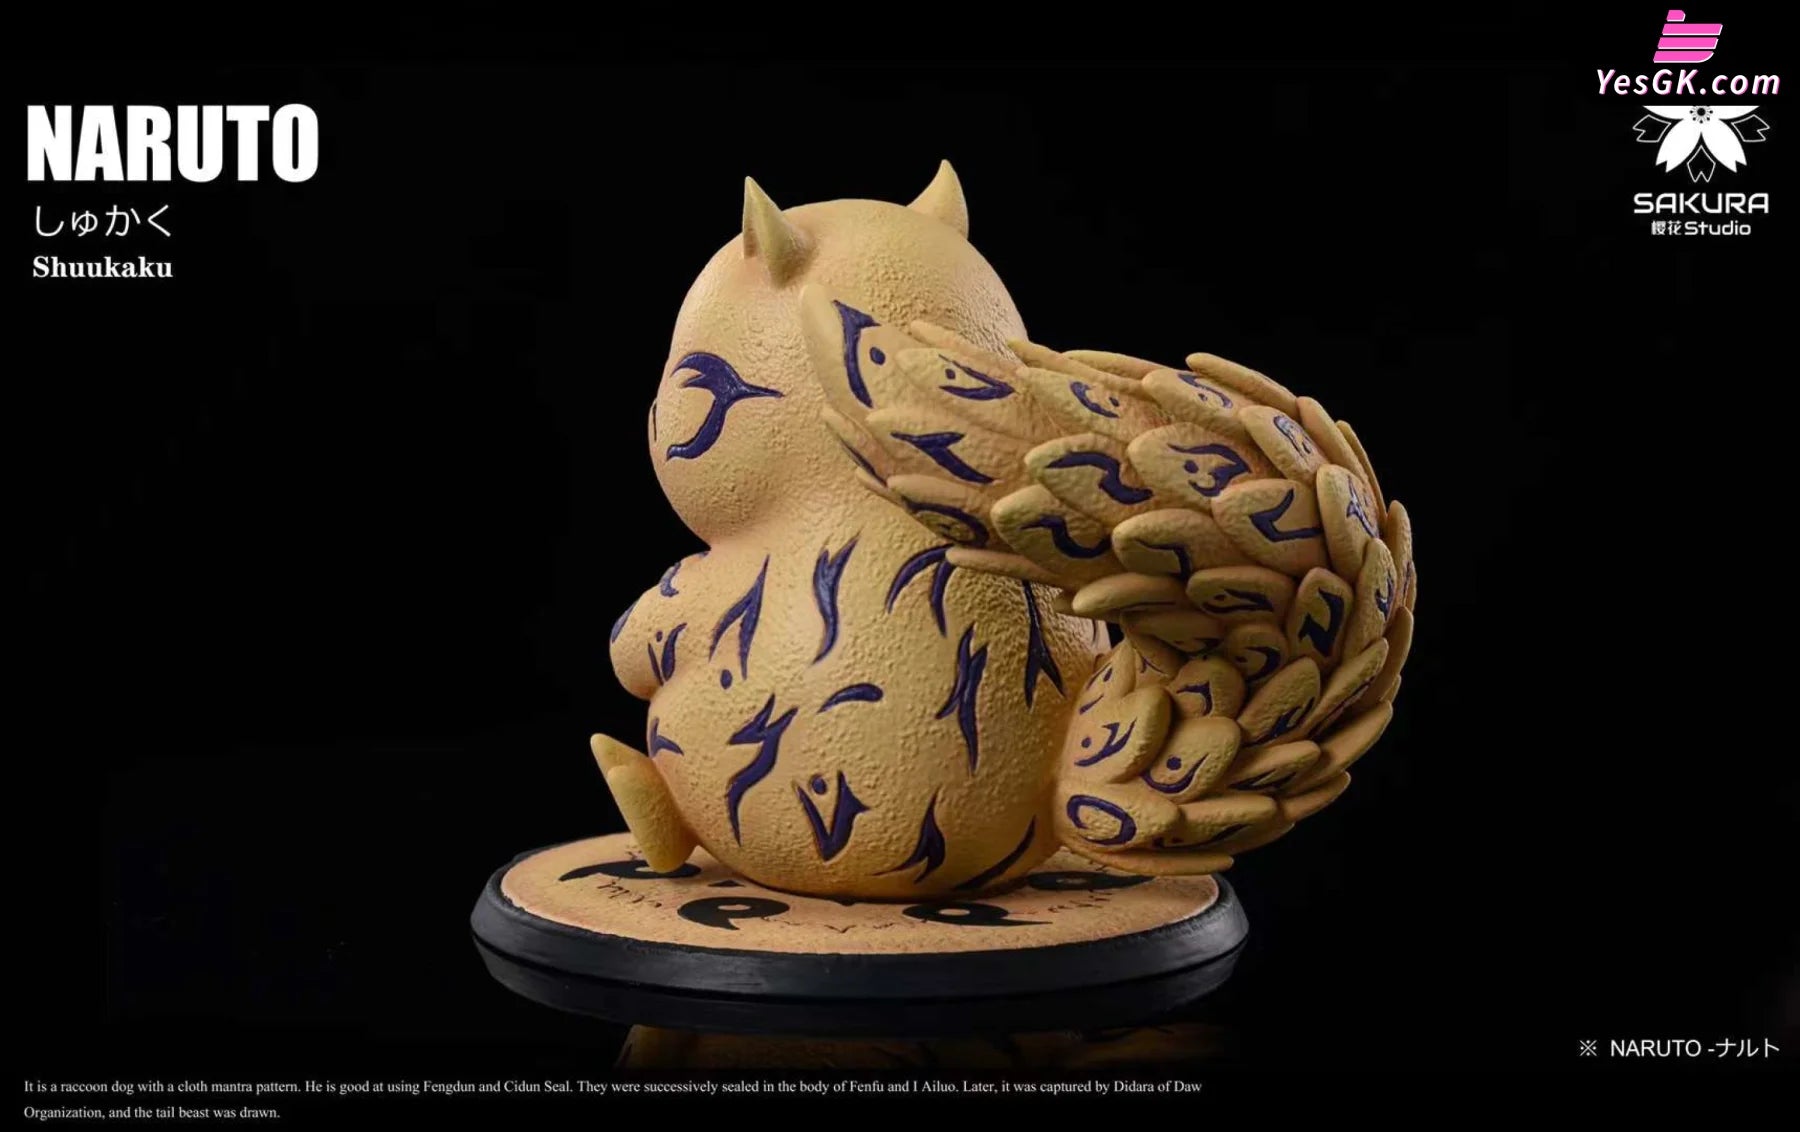 Naruto Childhood Tailed Beast Series Statue - Sakura Studio [In-Stock]